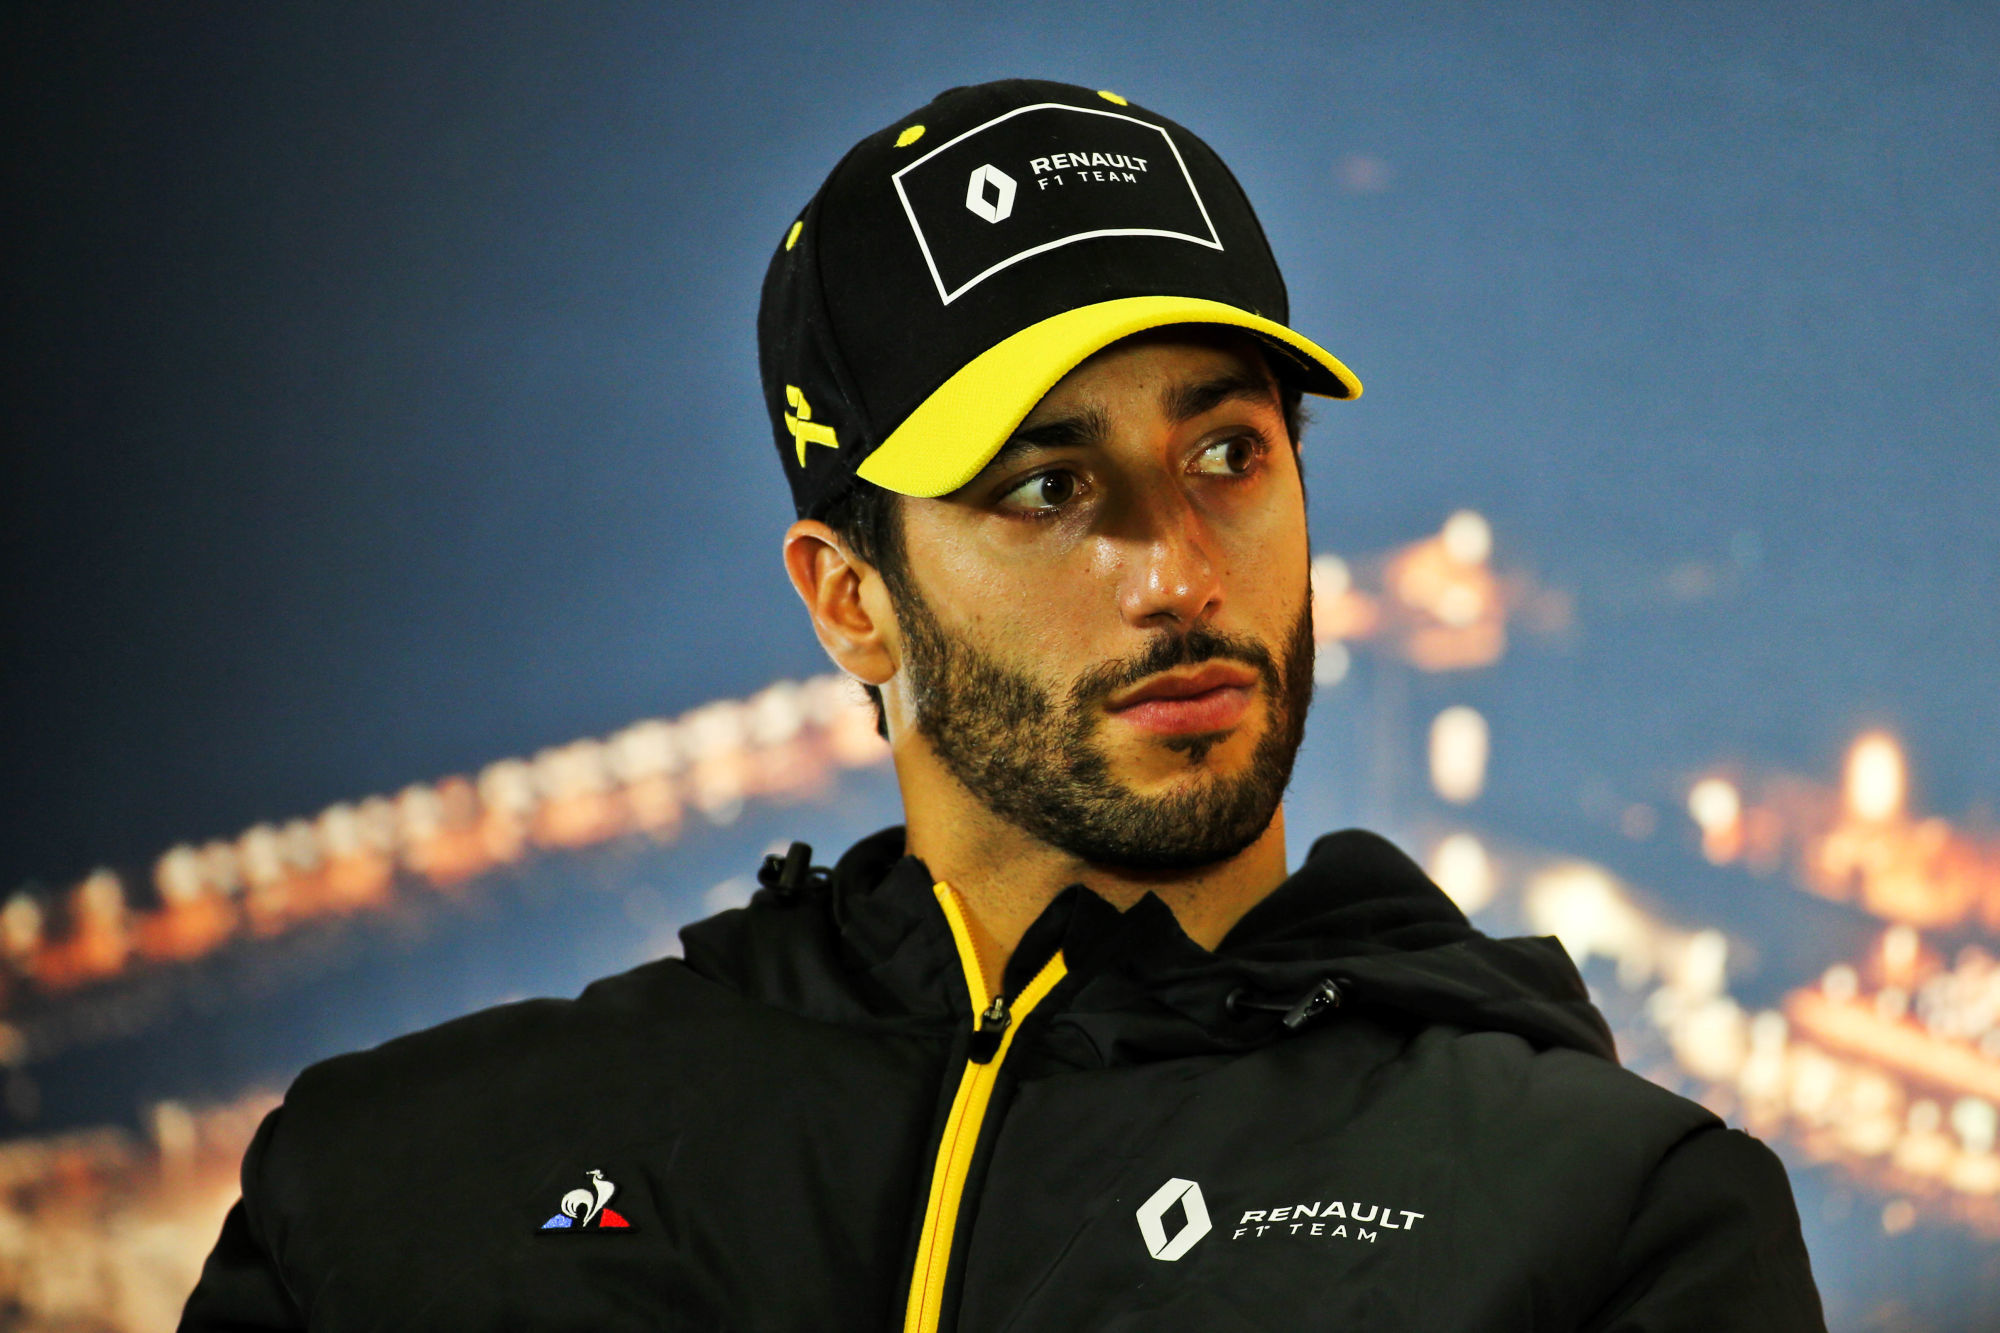 Daniel Ricciardo (AUS) Renault F1 Team -
Photo by Icon Sport